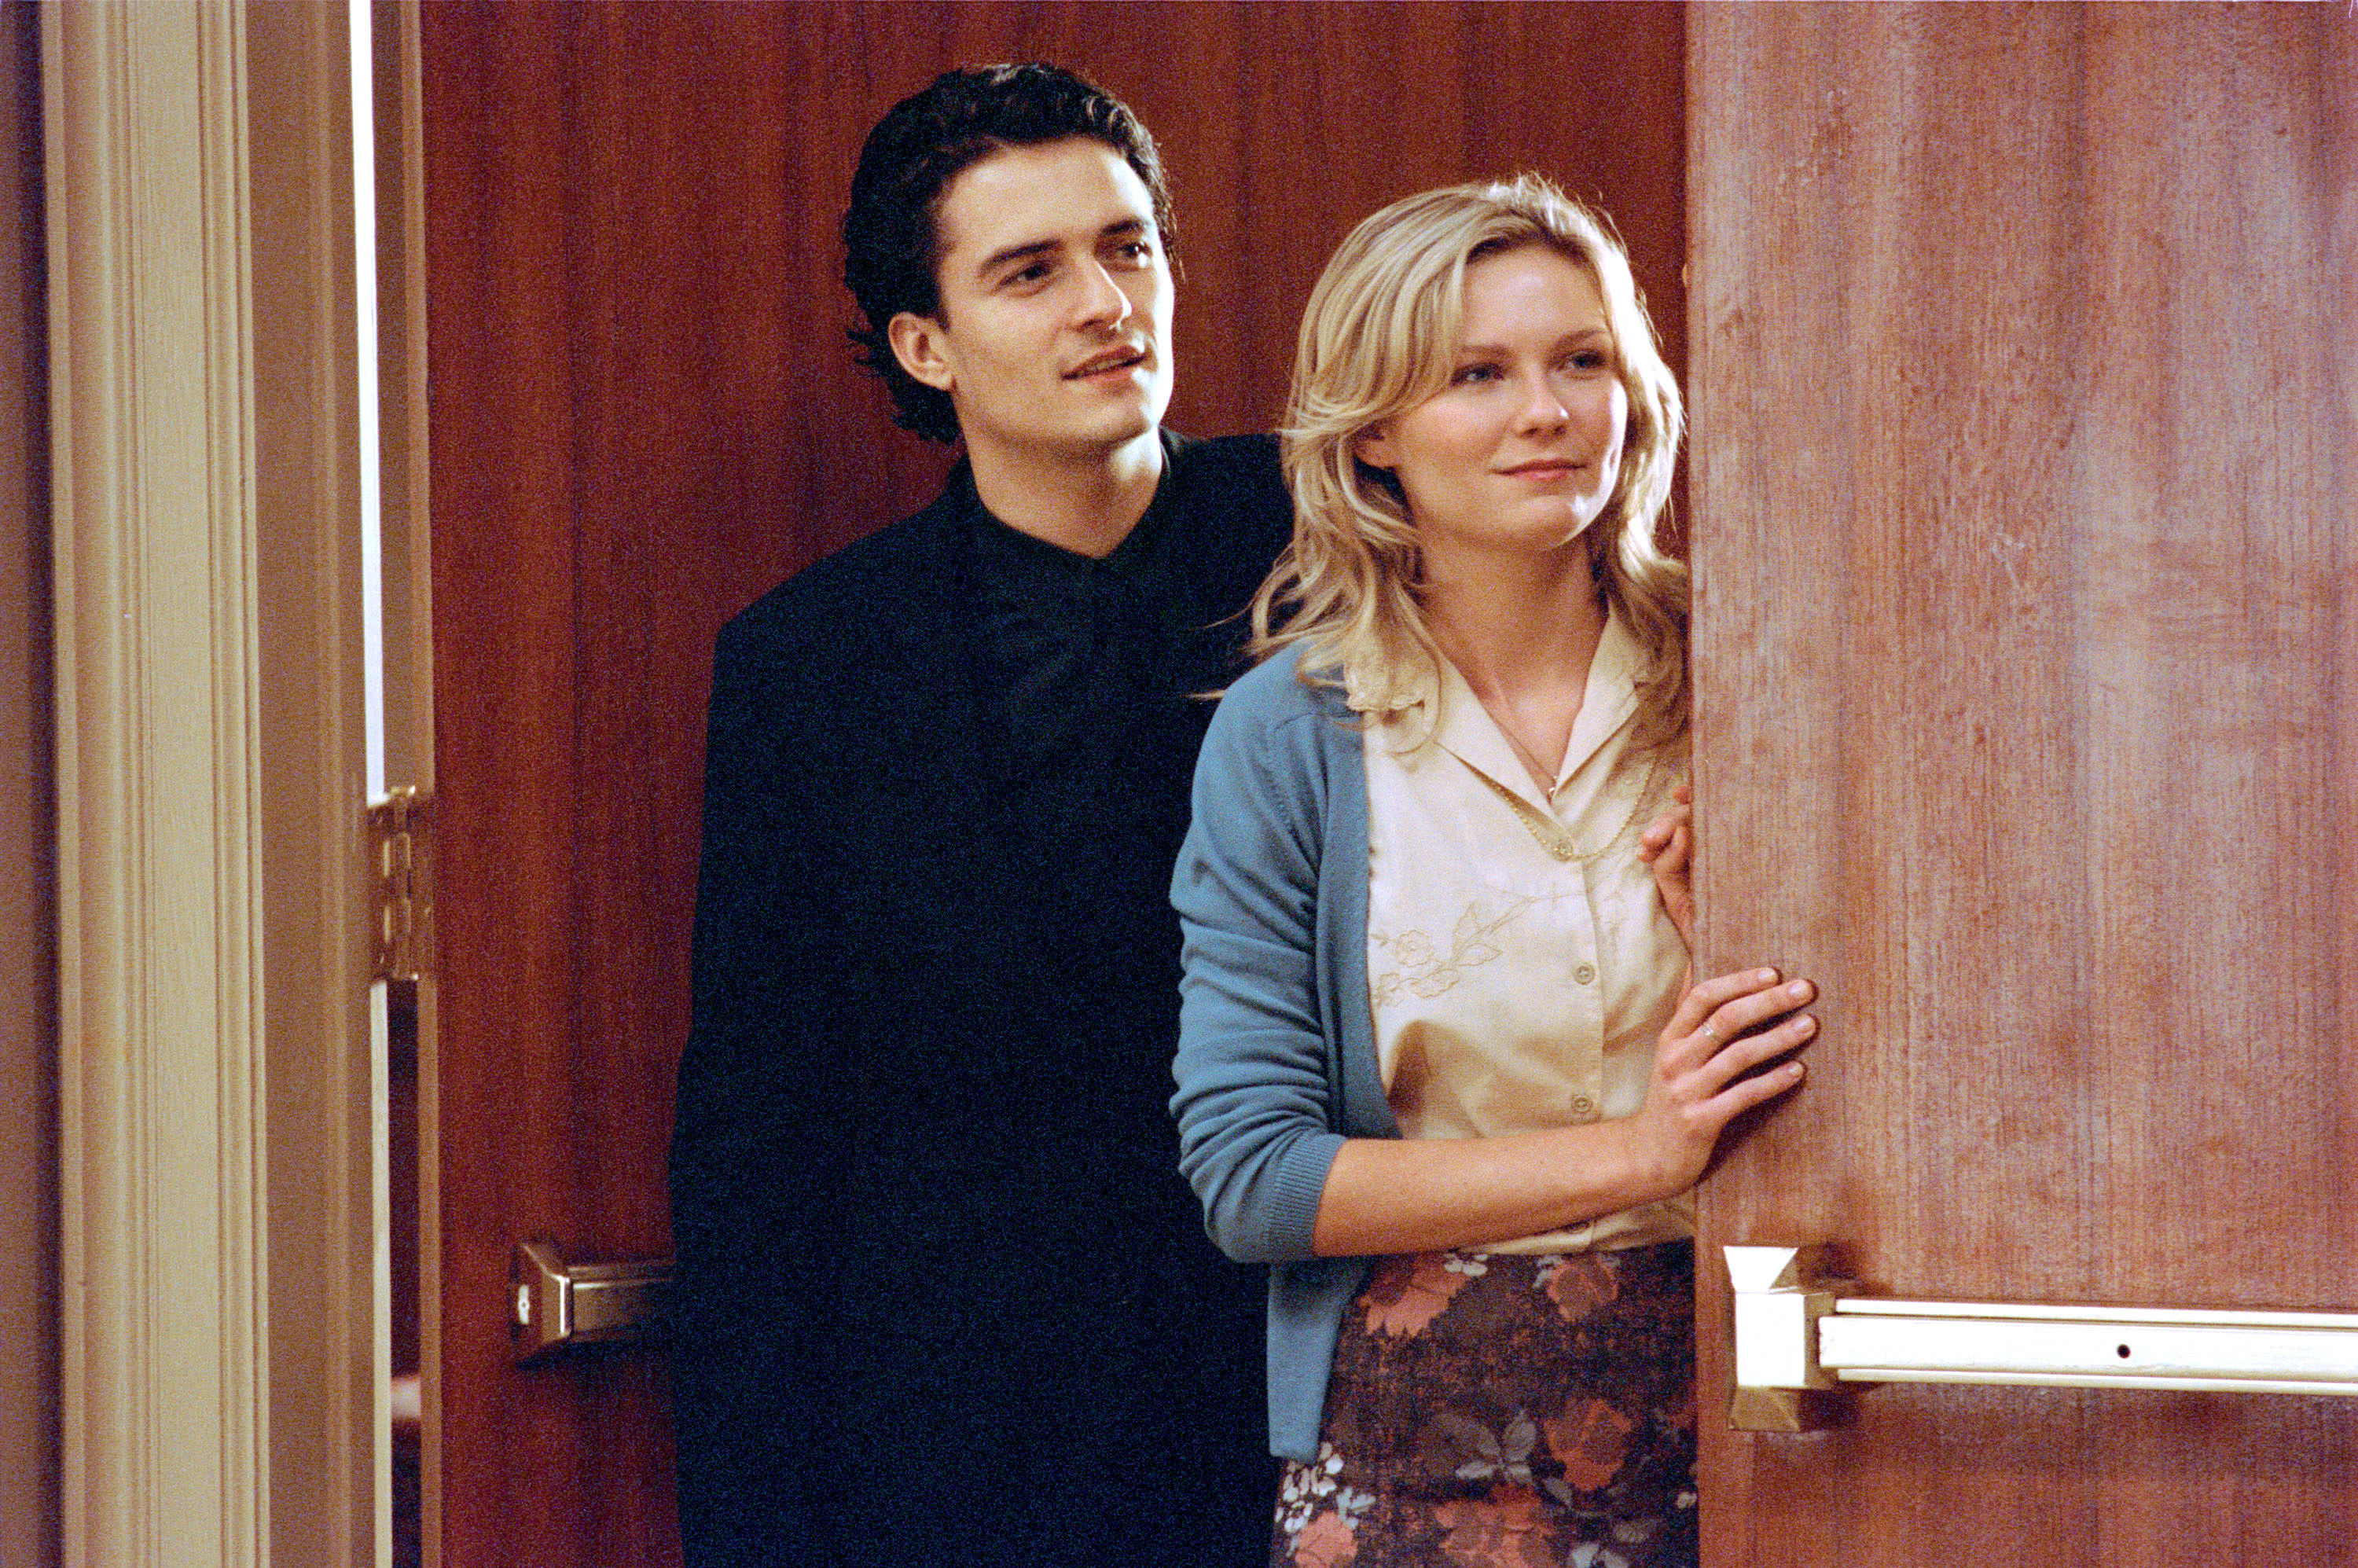 Orlando Bloom and Kirsten Dunst stand behind a door smiling